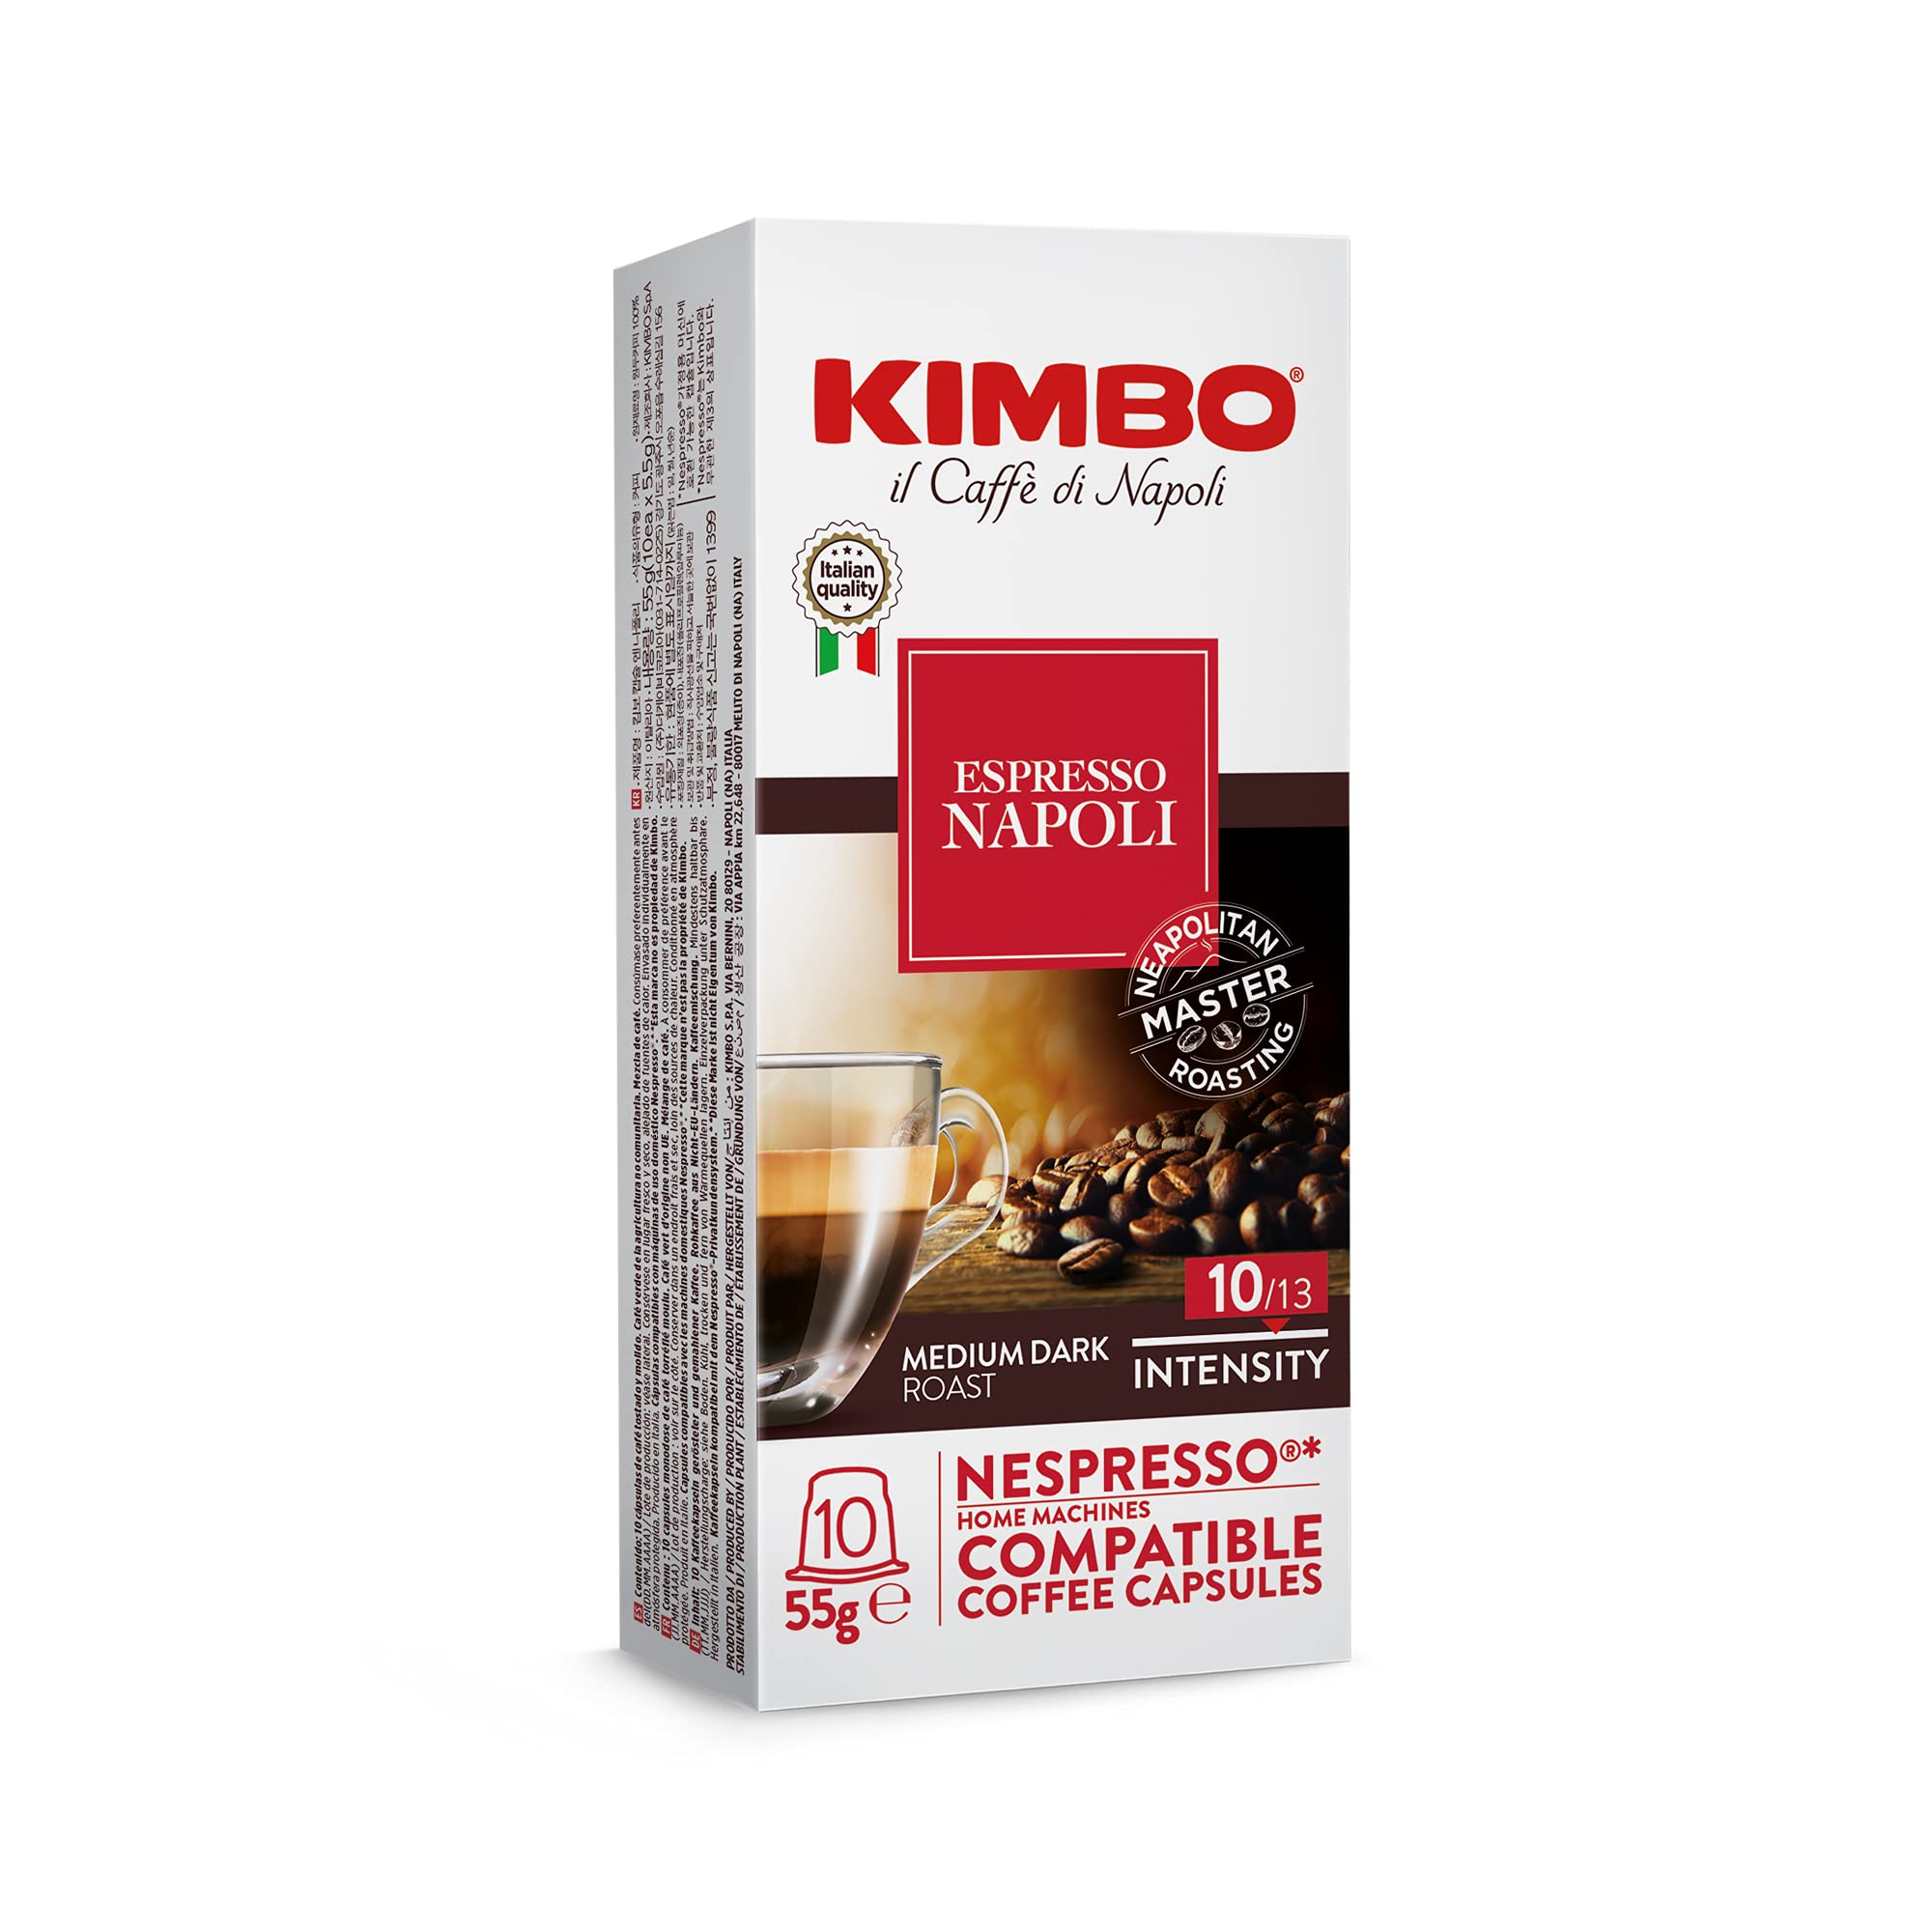 Book Cover 4 Boxes of Kimbo Espresso Napoli Nespresso Capsules 10 Count (Pack of 4)